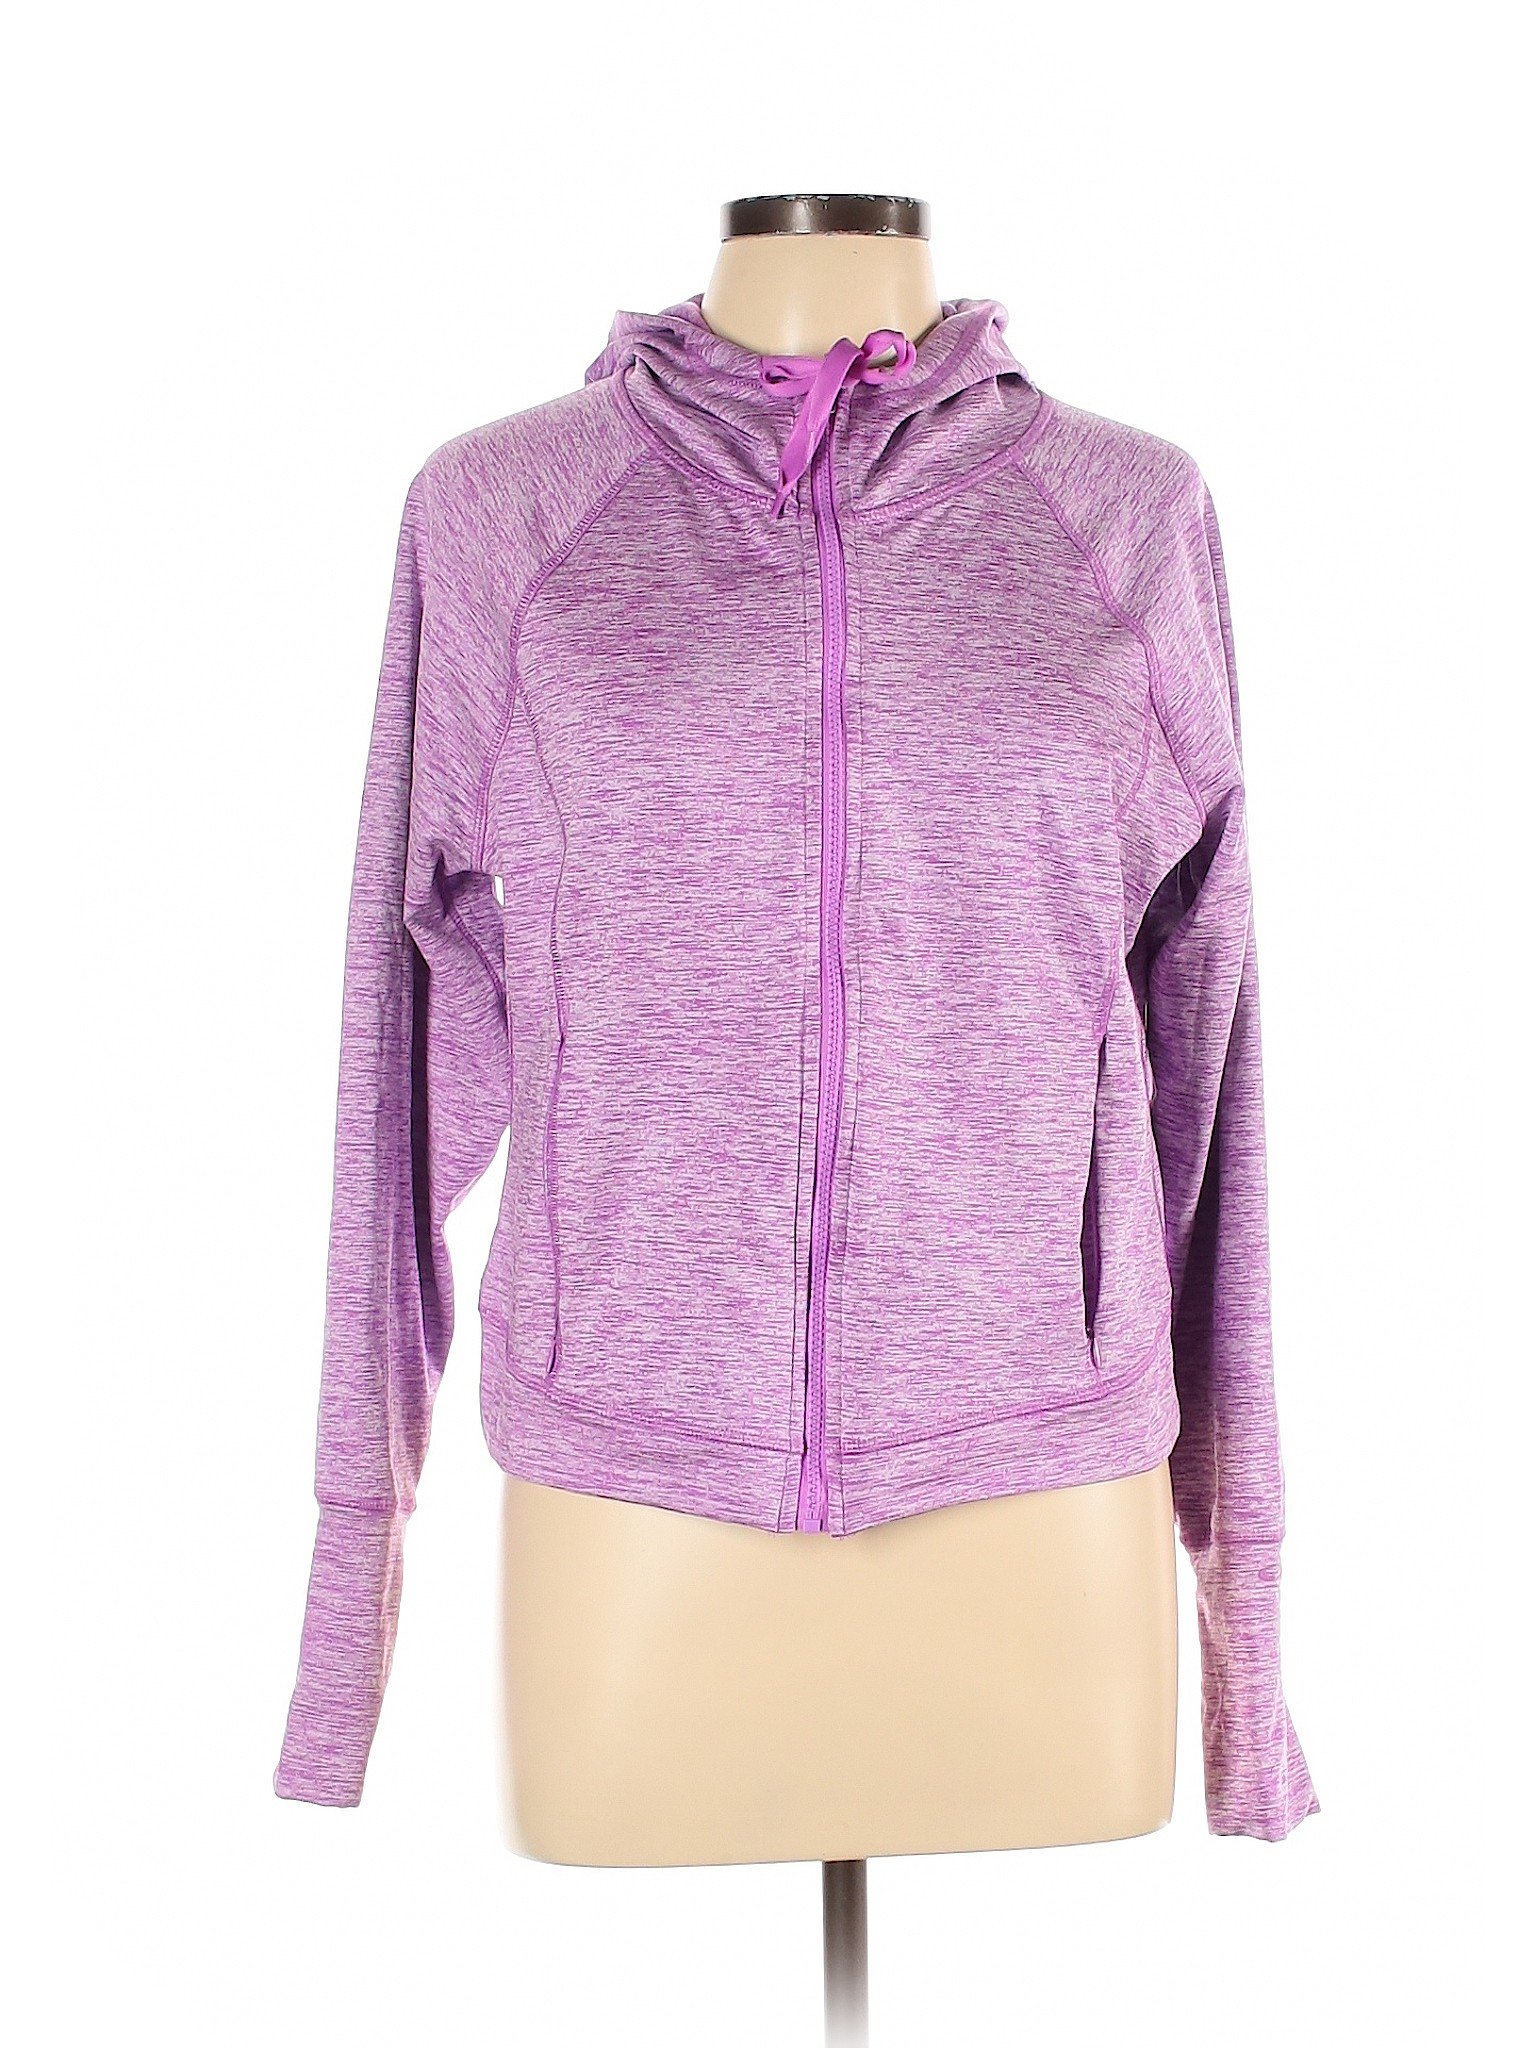 C9 By Champion Women Purple Track Jacket L | eBay